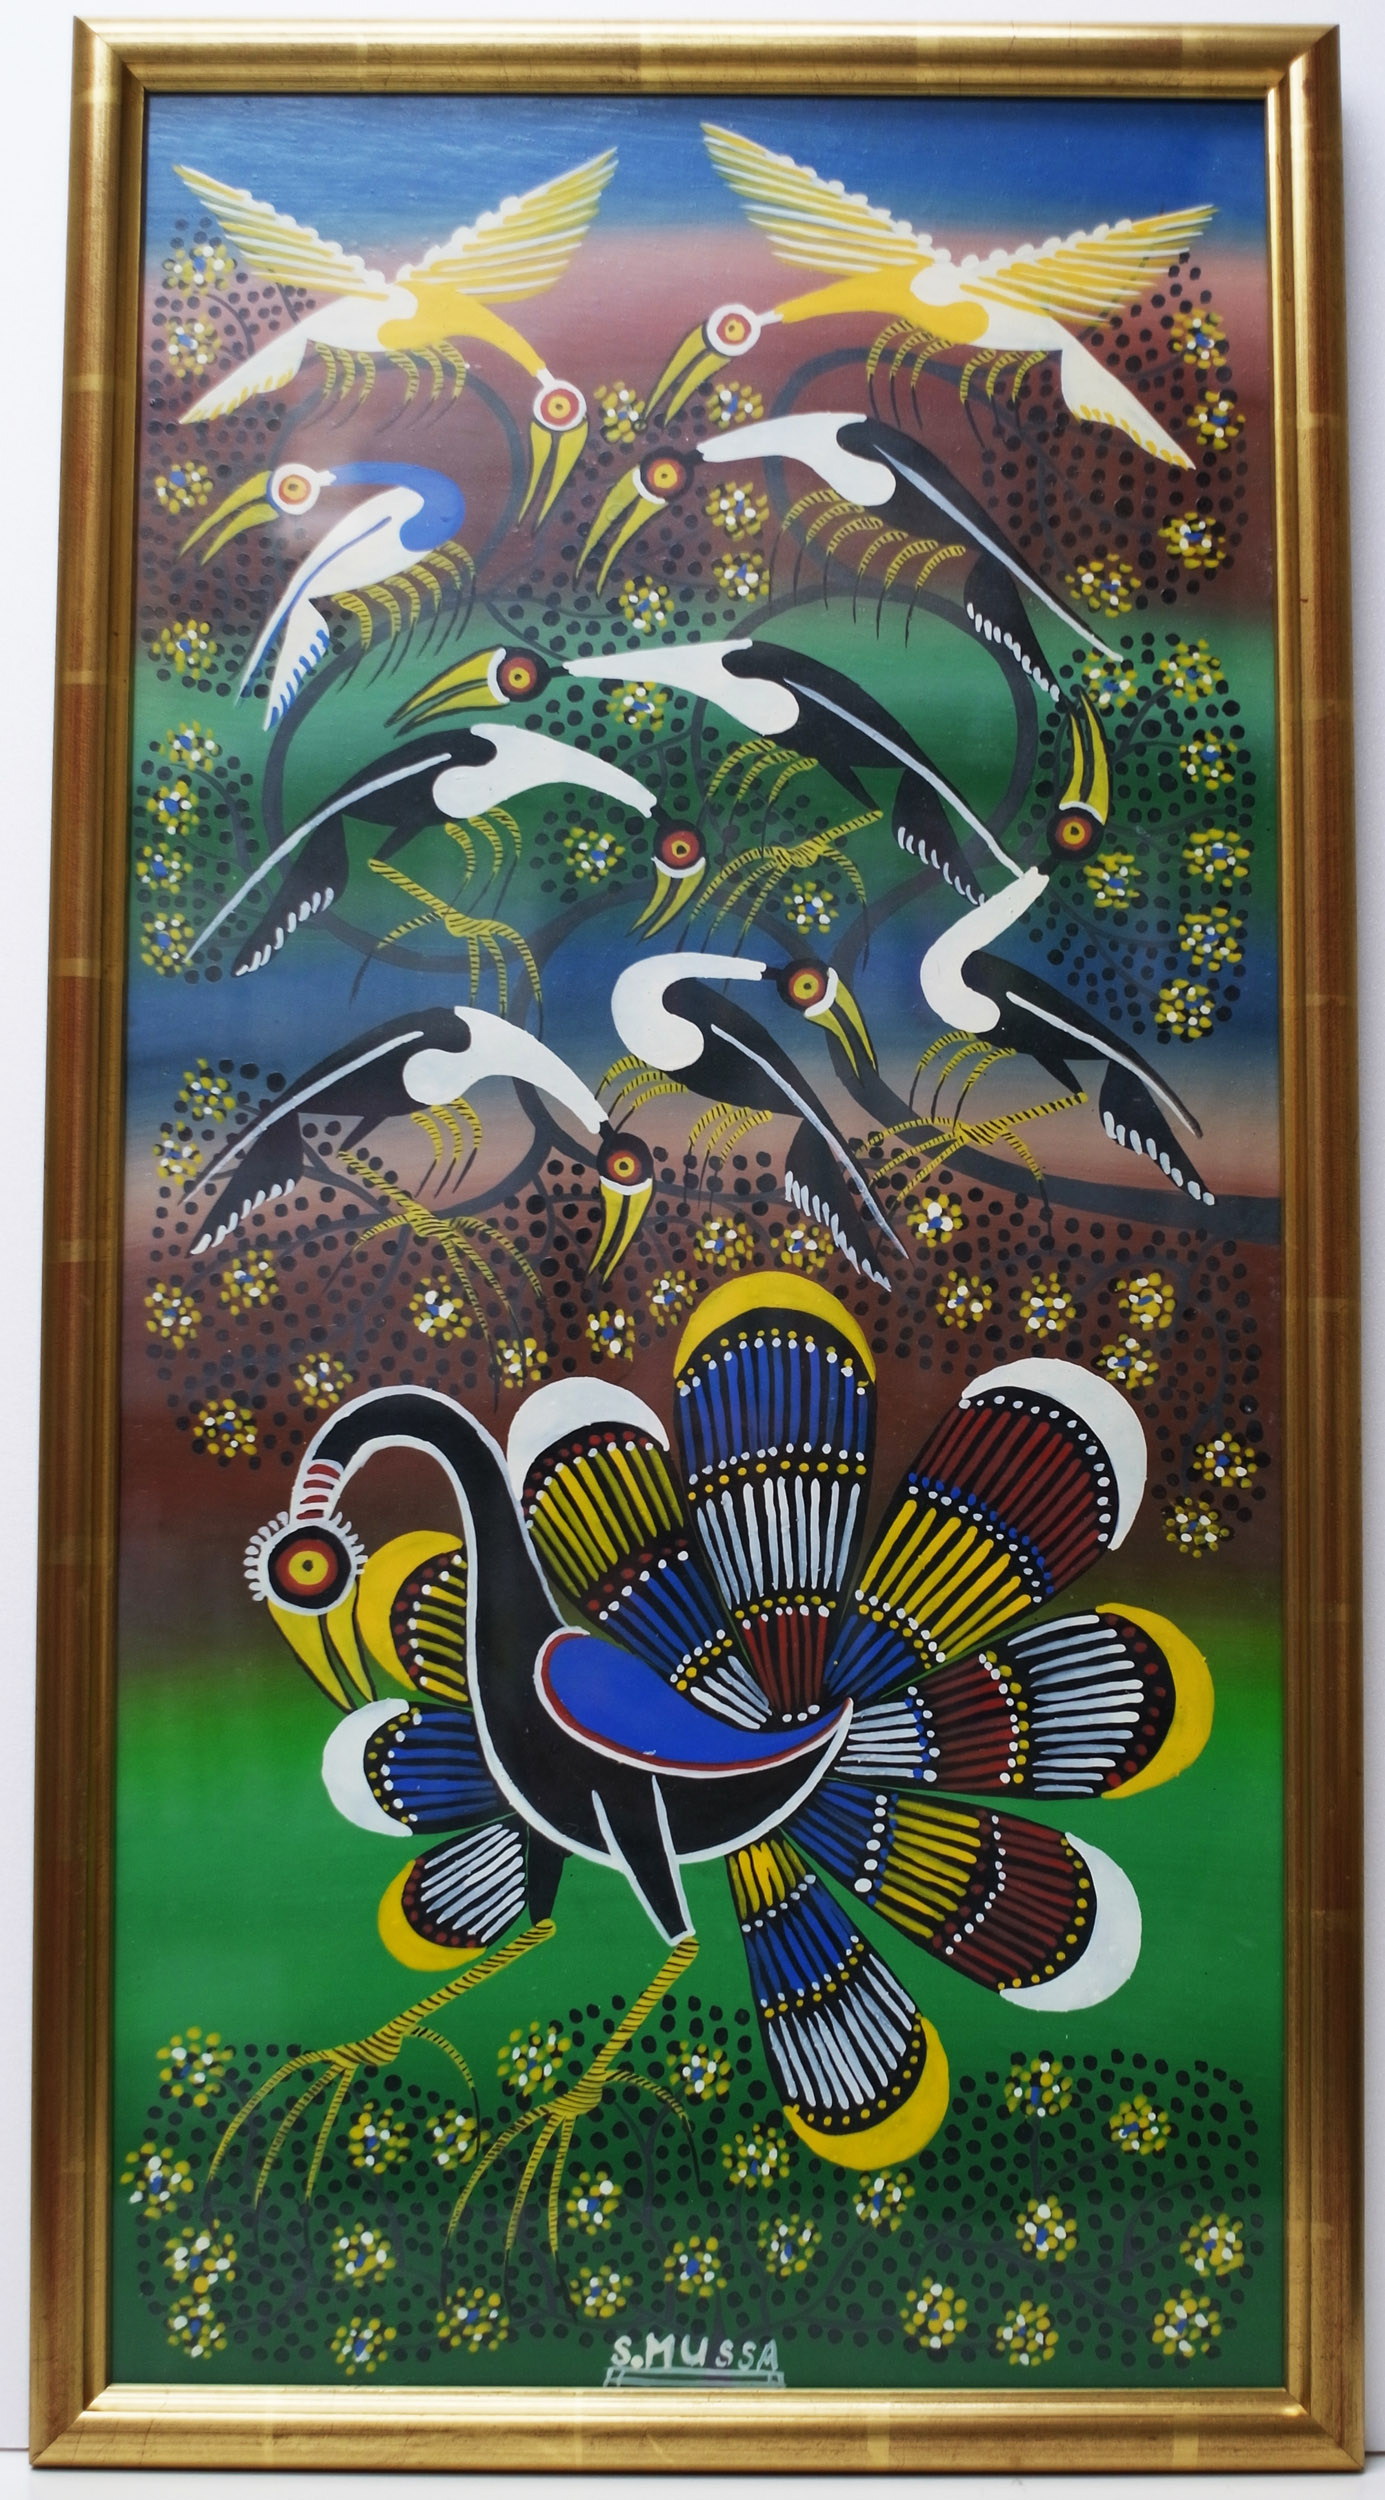 SALUM MUSSA - Peacock (600~300 Framed)